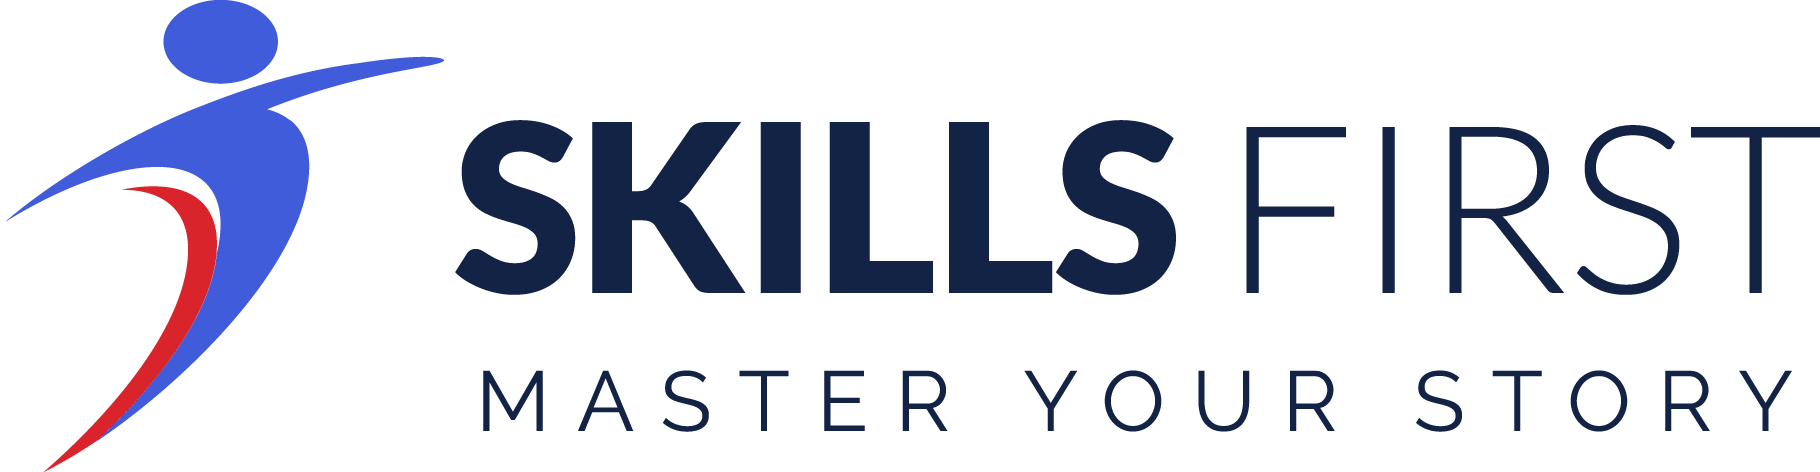 SkillsFirst_logo